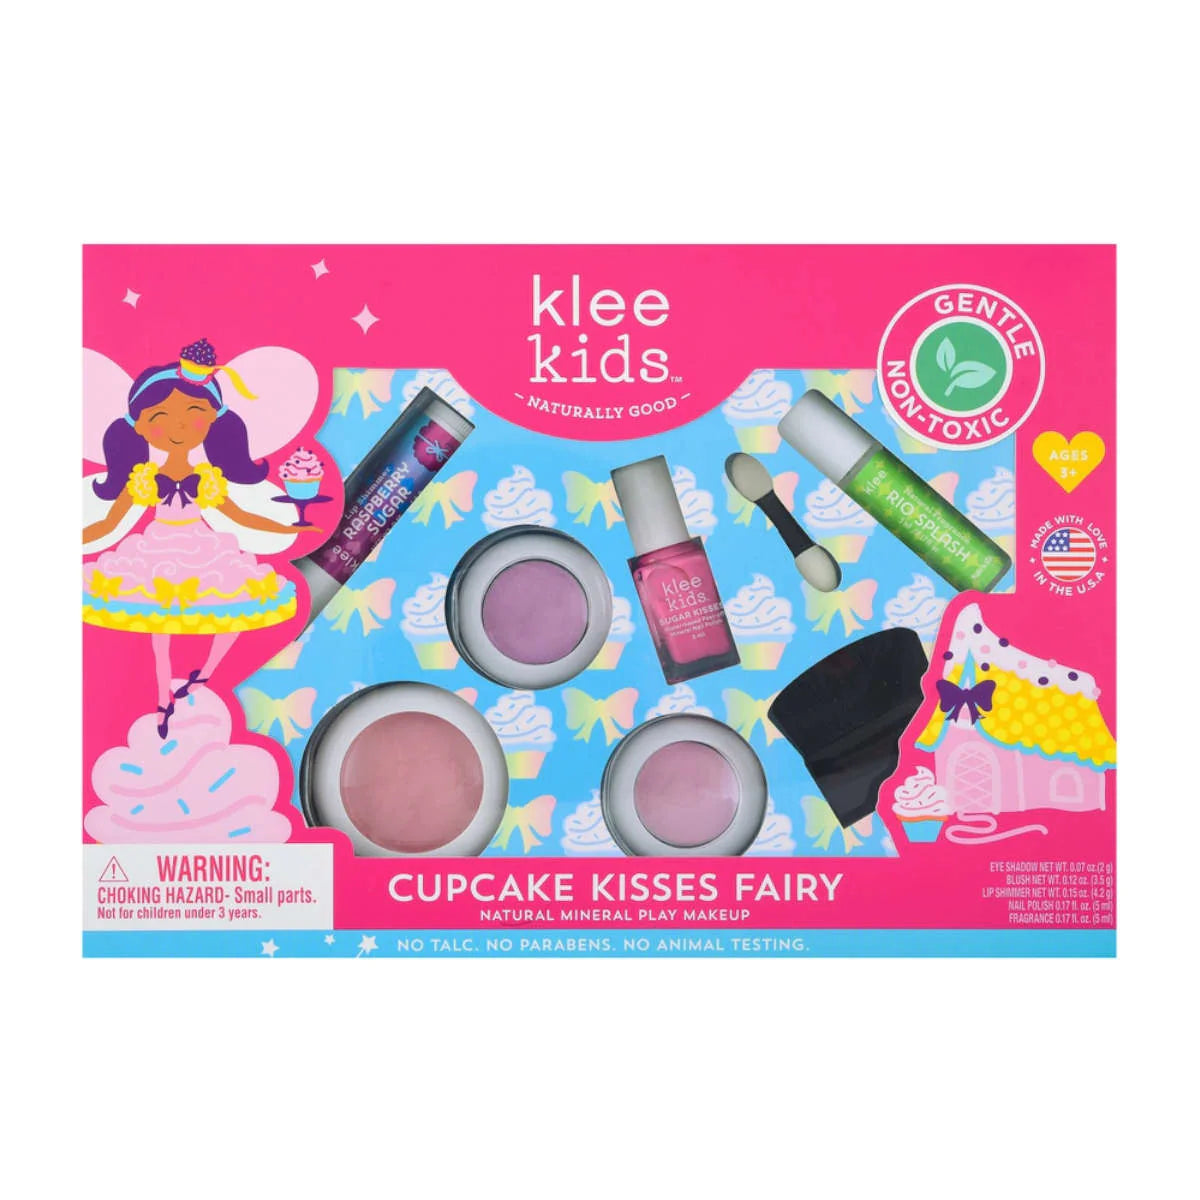 Klee Cupcake Kisses Fairy